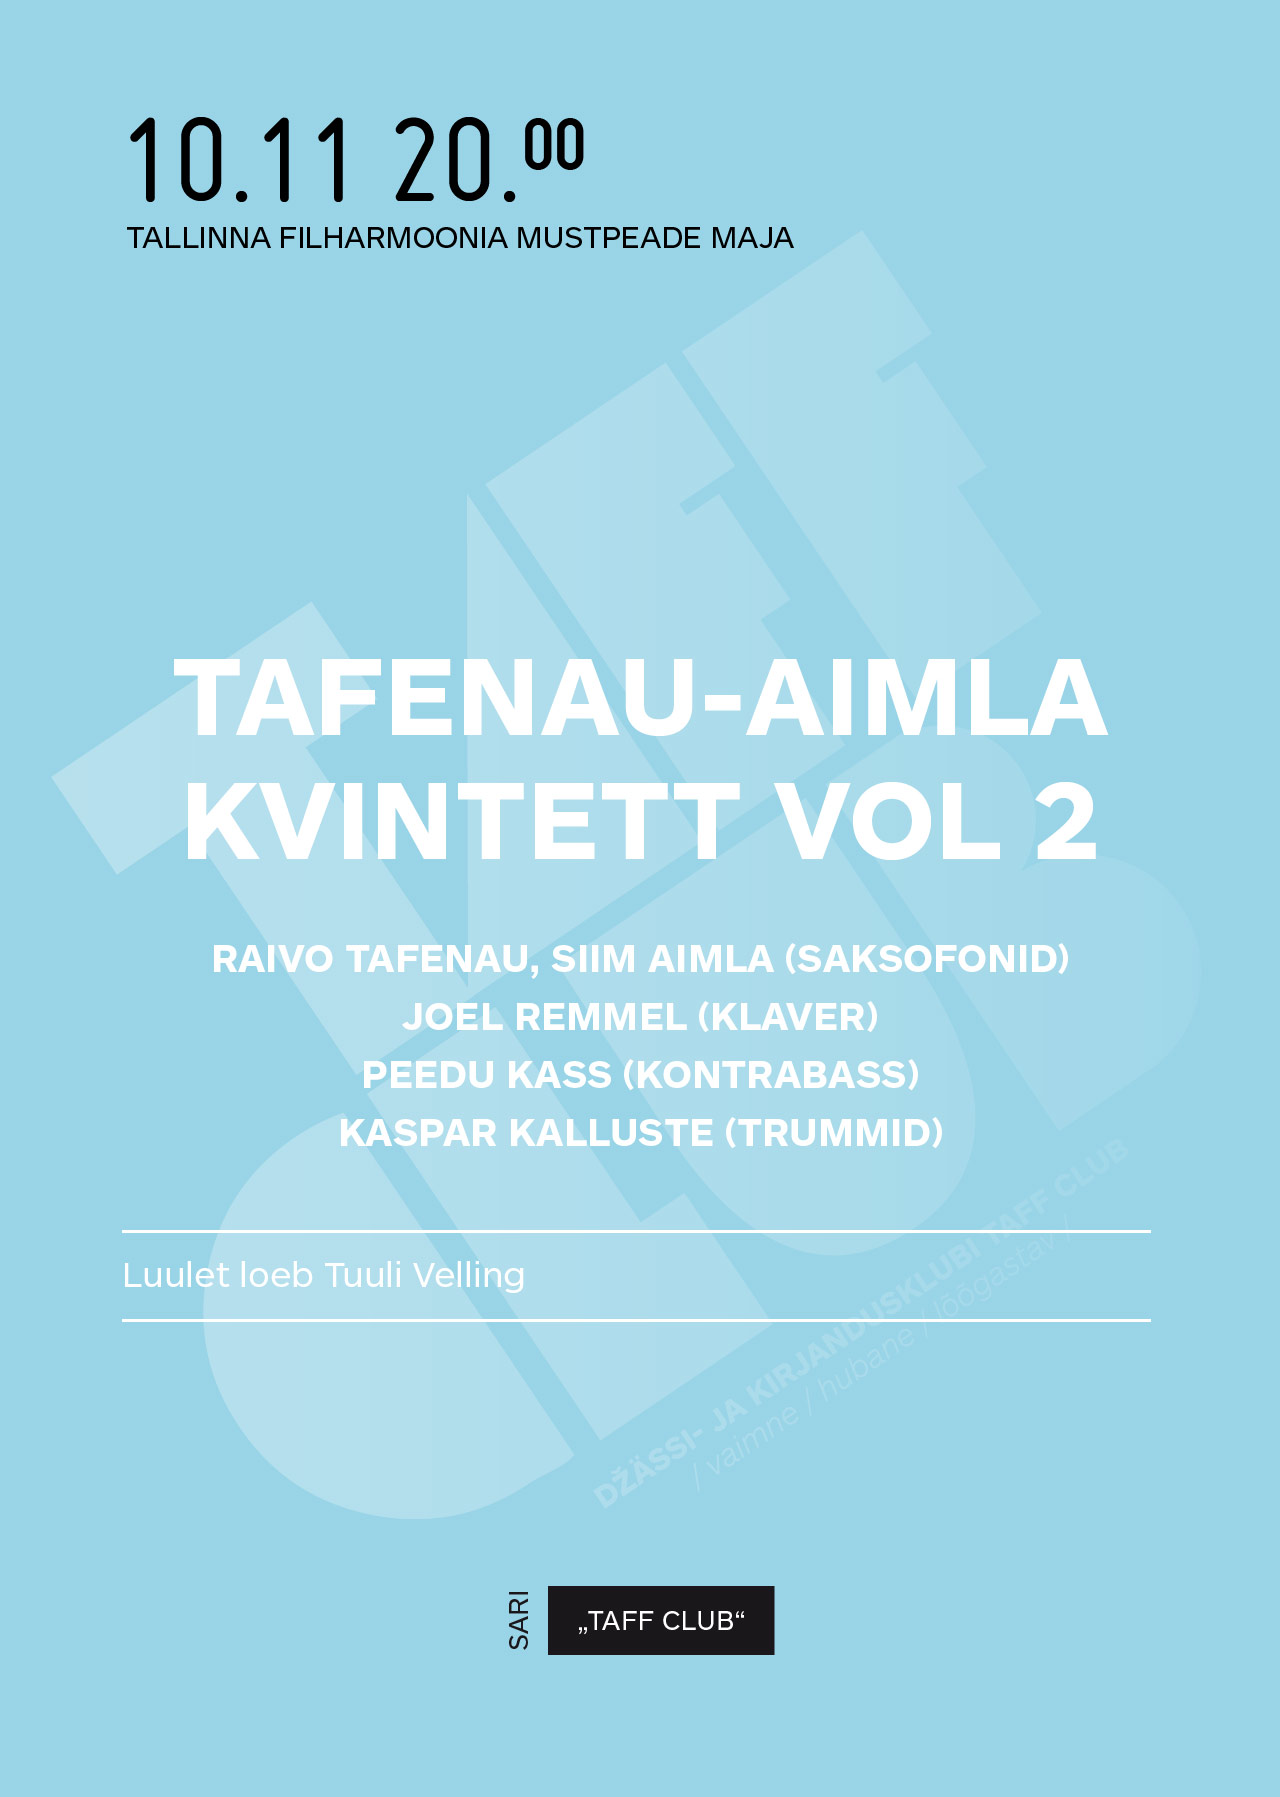 TAFF CLUB. TAFENAU-AIMLA KVINTETT VOL 2 